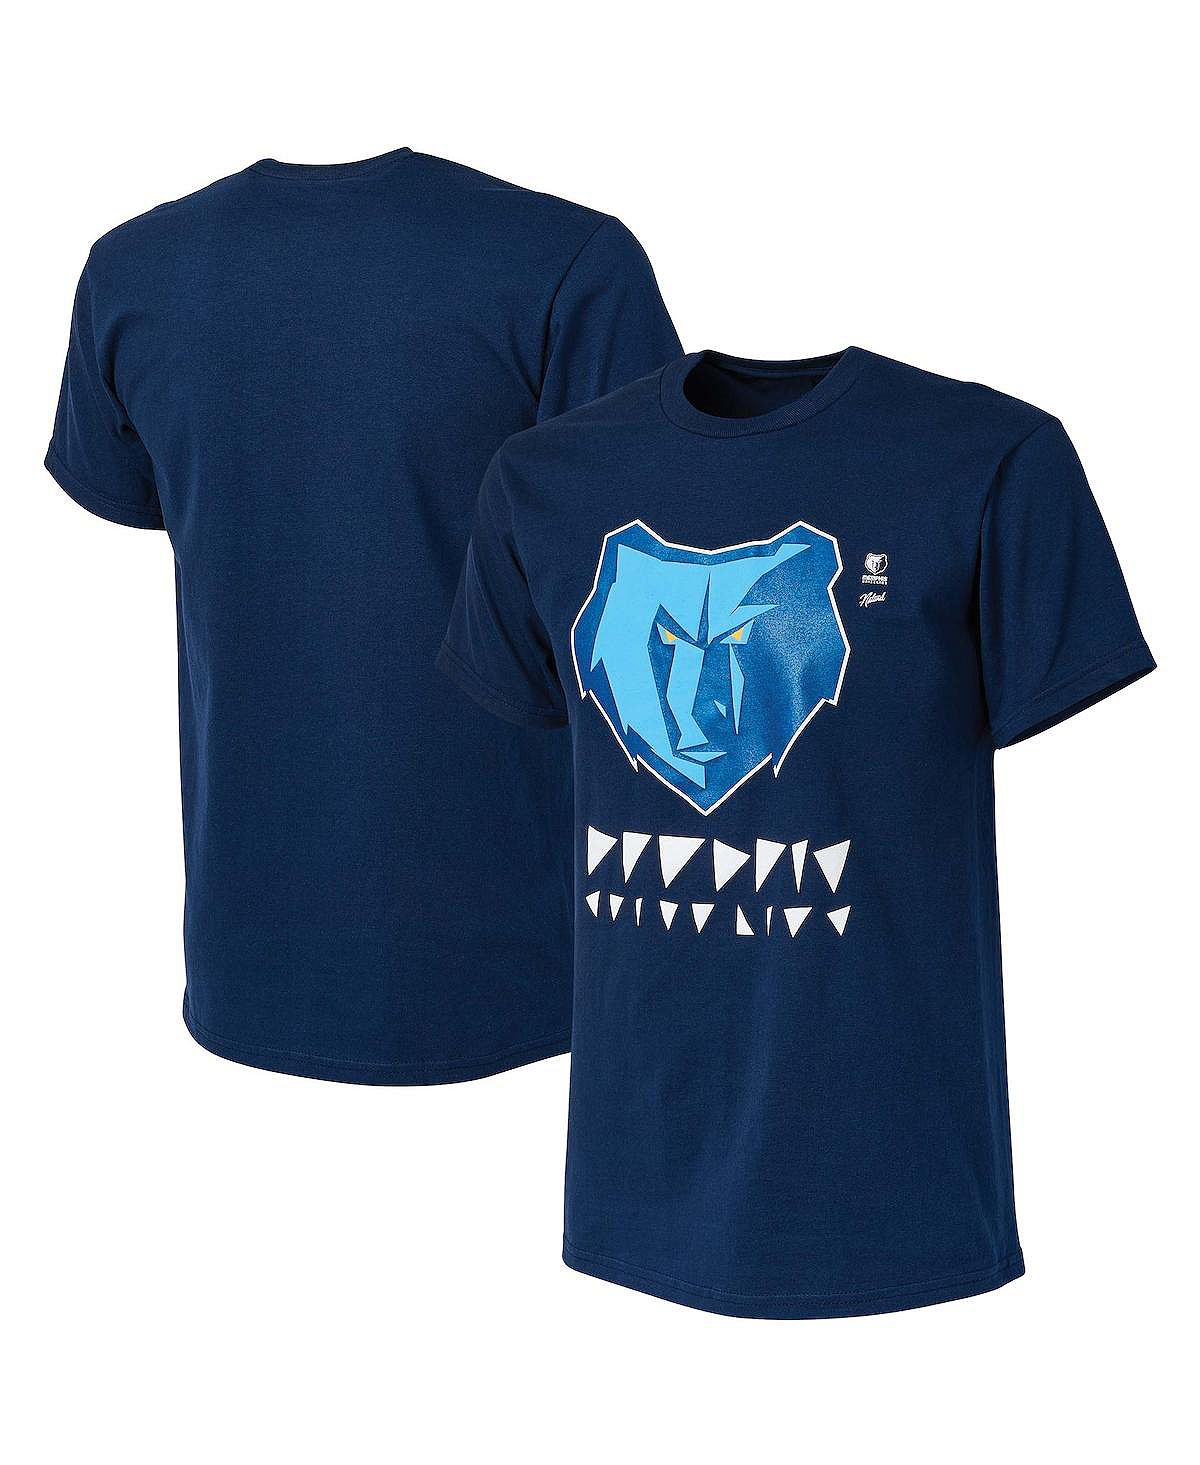 Мужская футболка nba x naturel navy memphis grizzlies no caller id NBA Exclusive Collection, синий